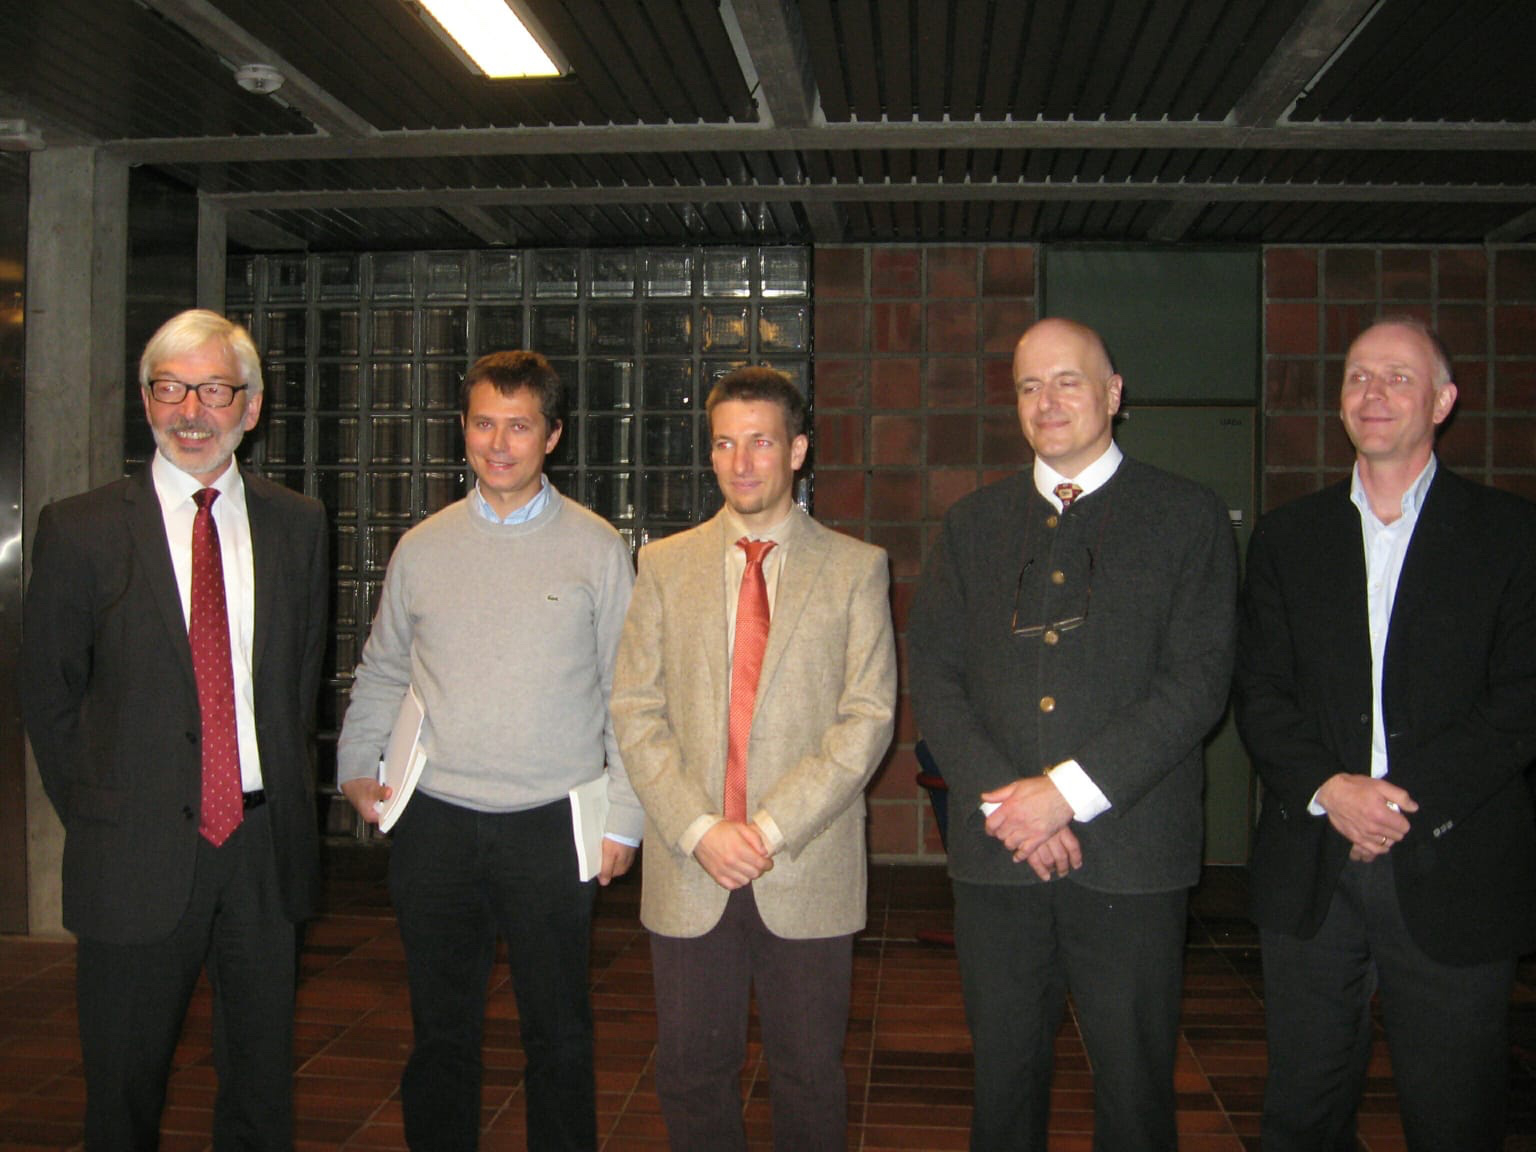 From left: Peter Comba (opponent), Giovanni Occhipinti, Marco Foscato, Christophe Steinbeck (opponent), Vidar R. Jensen.